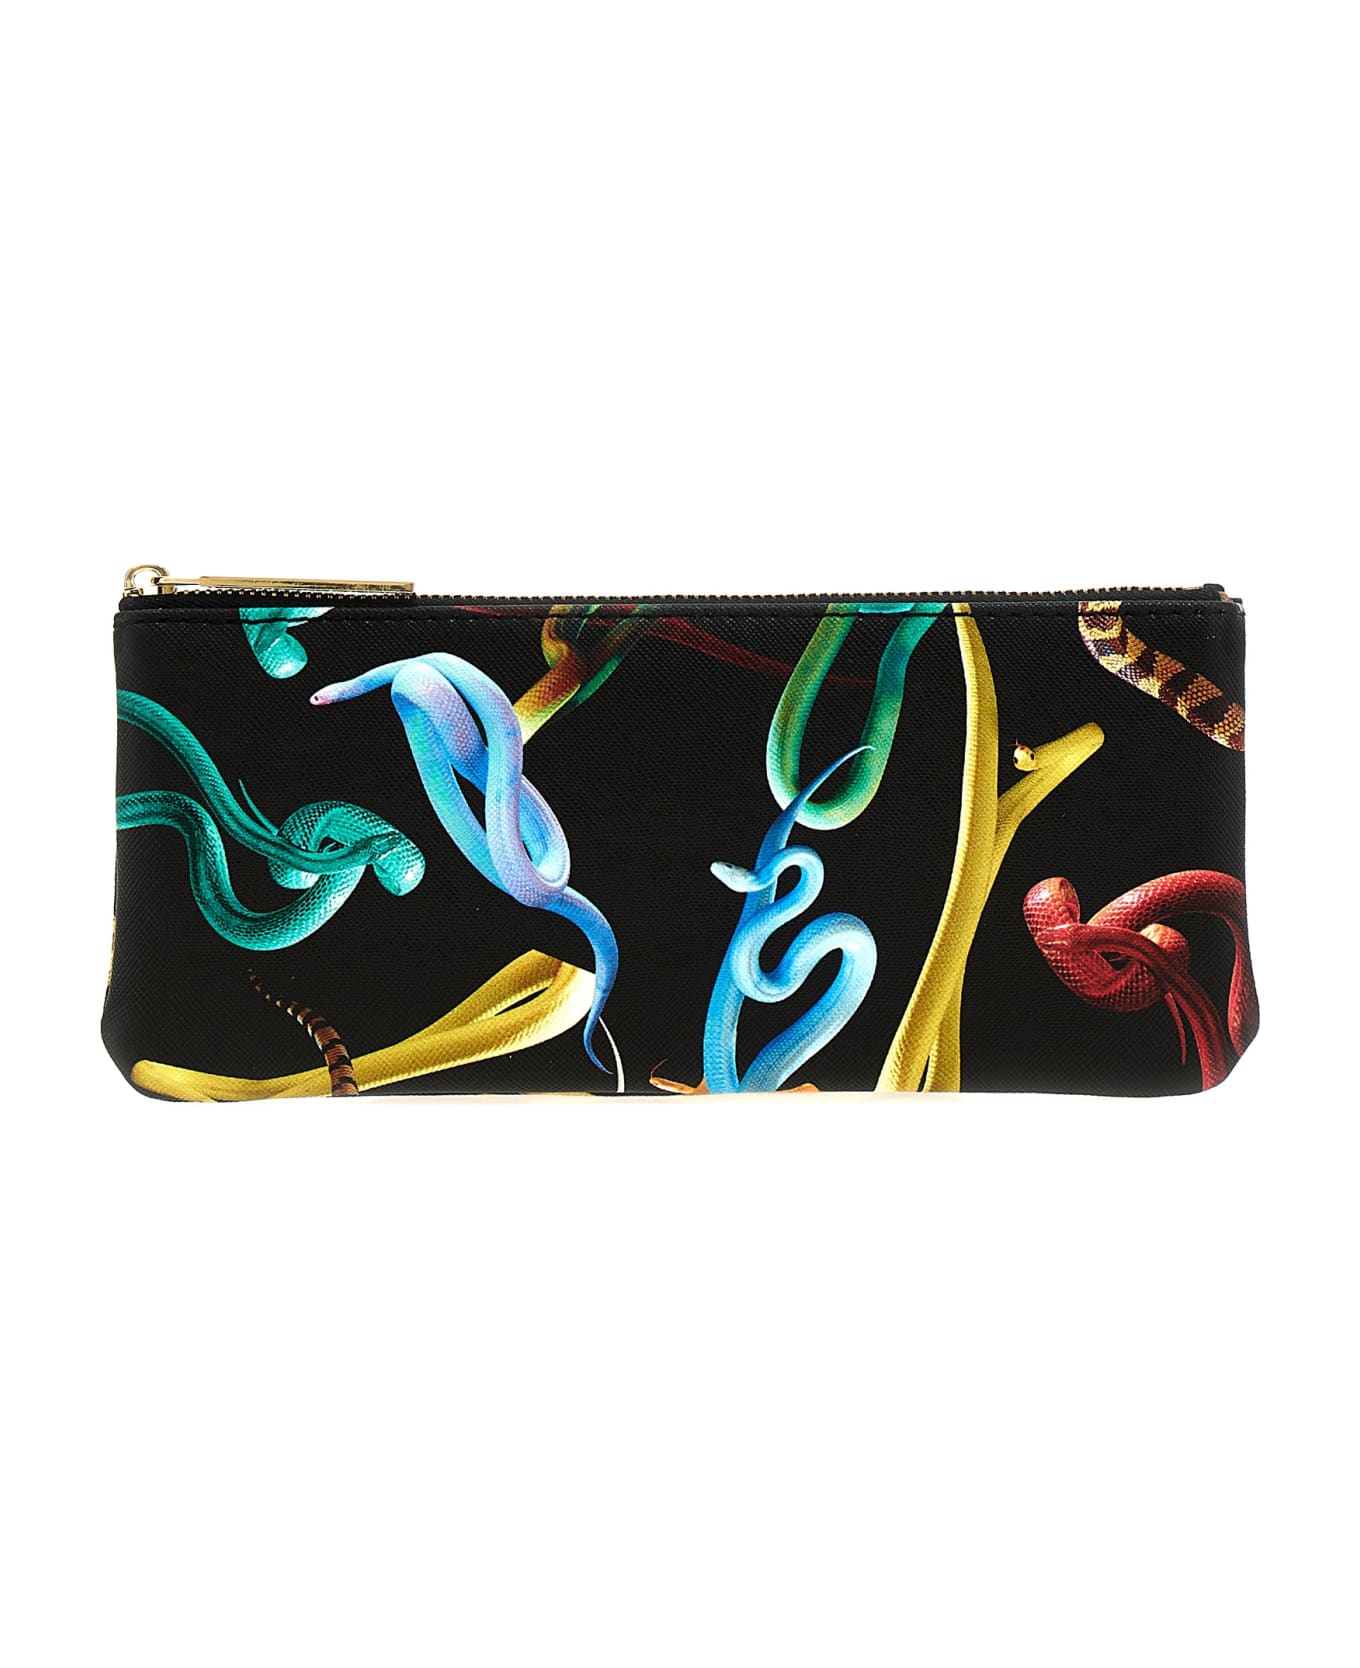 Seletti X Toiletpaper 'snakes' Case - Multicolor バッグ